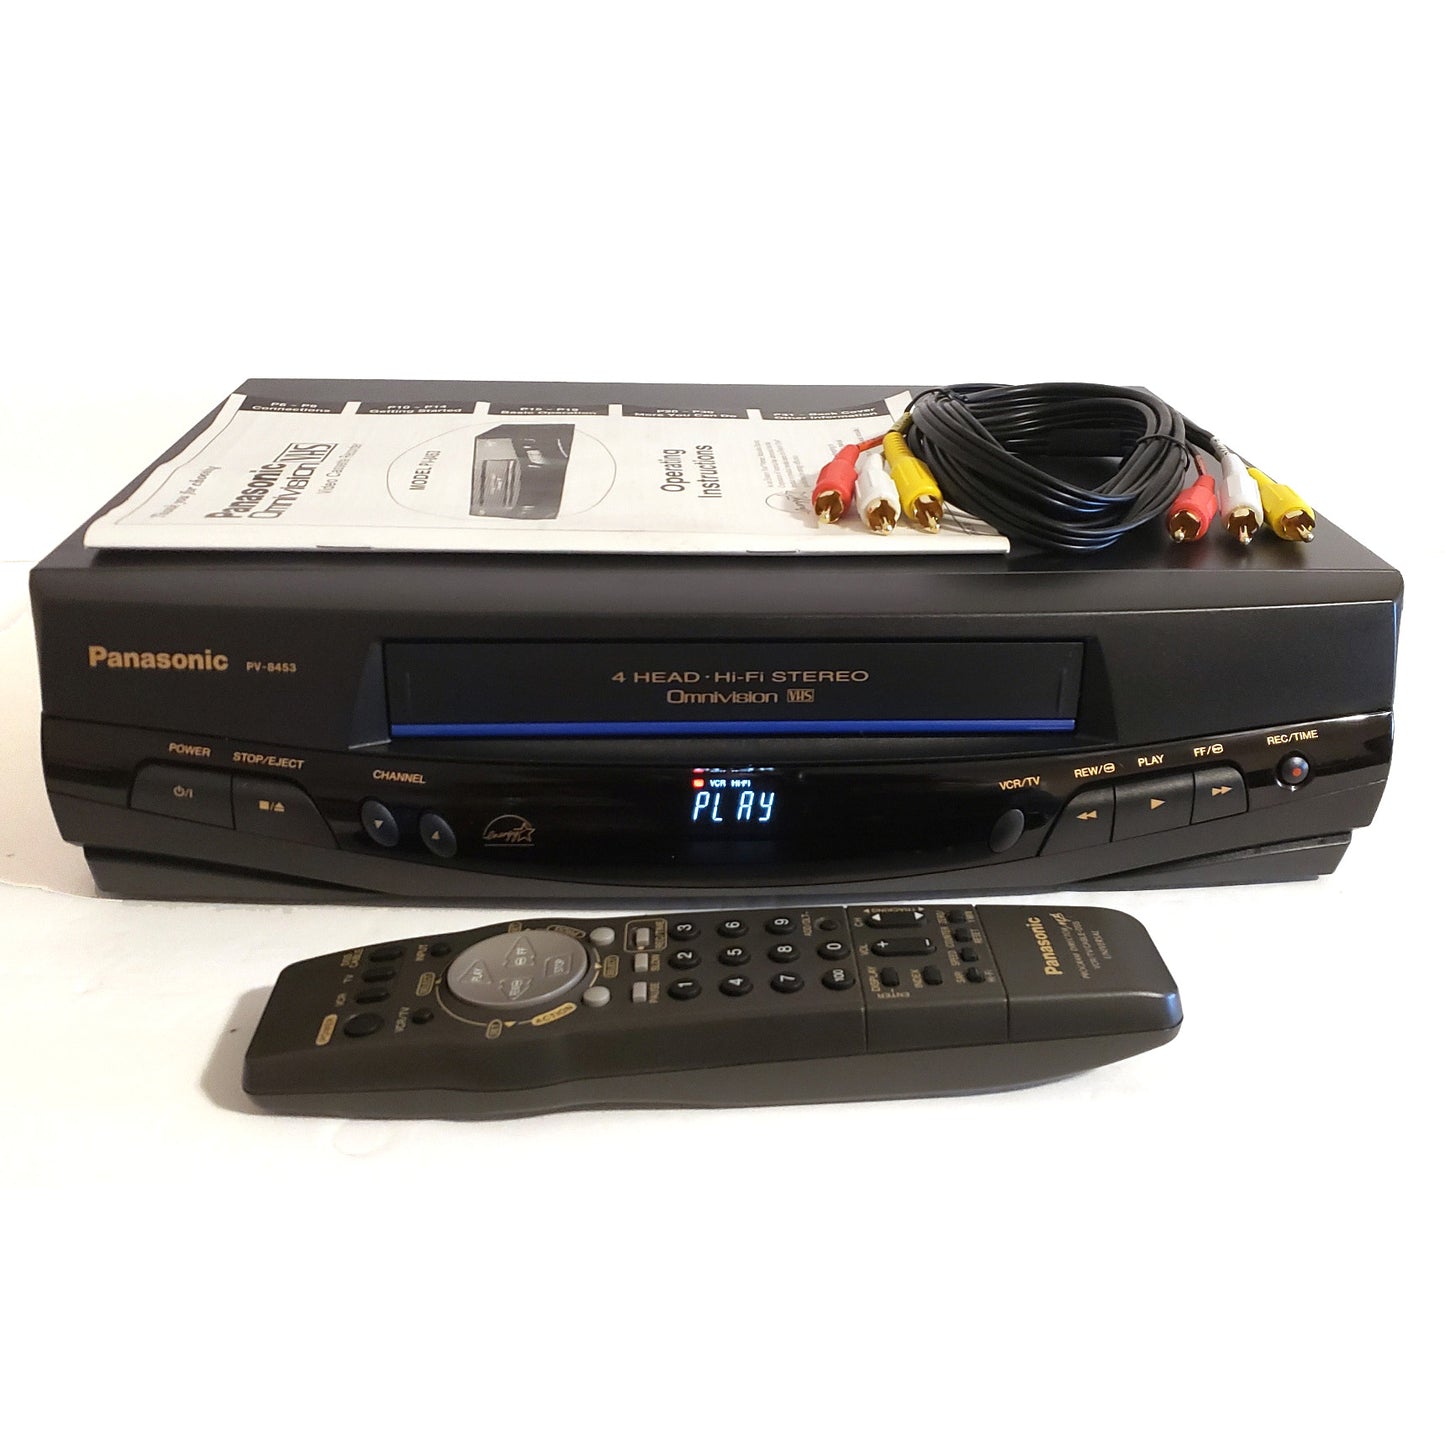 Panasonic PV-8453 Omnivision VCR